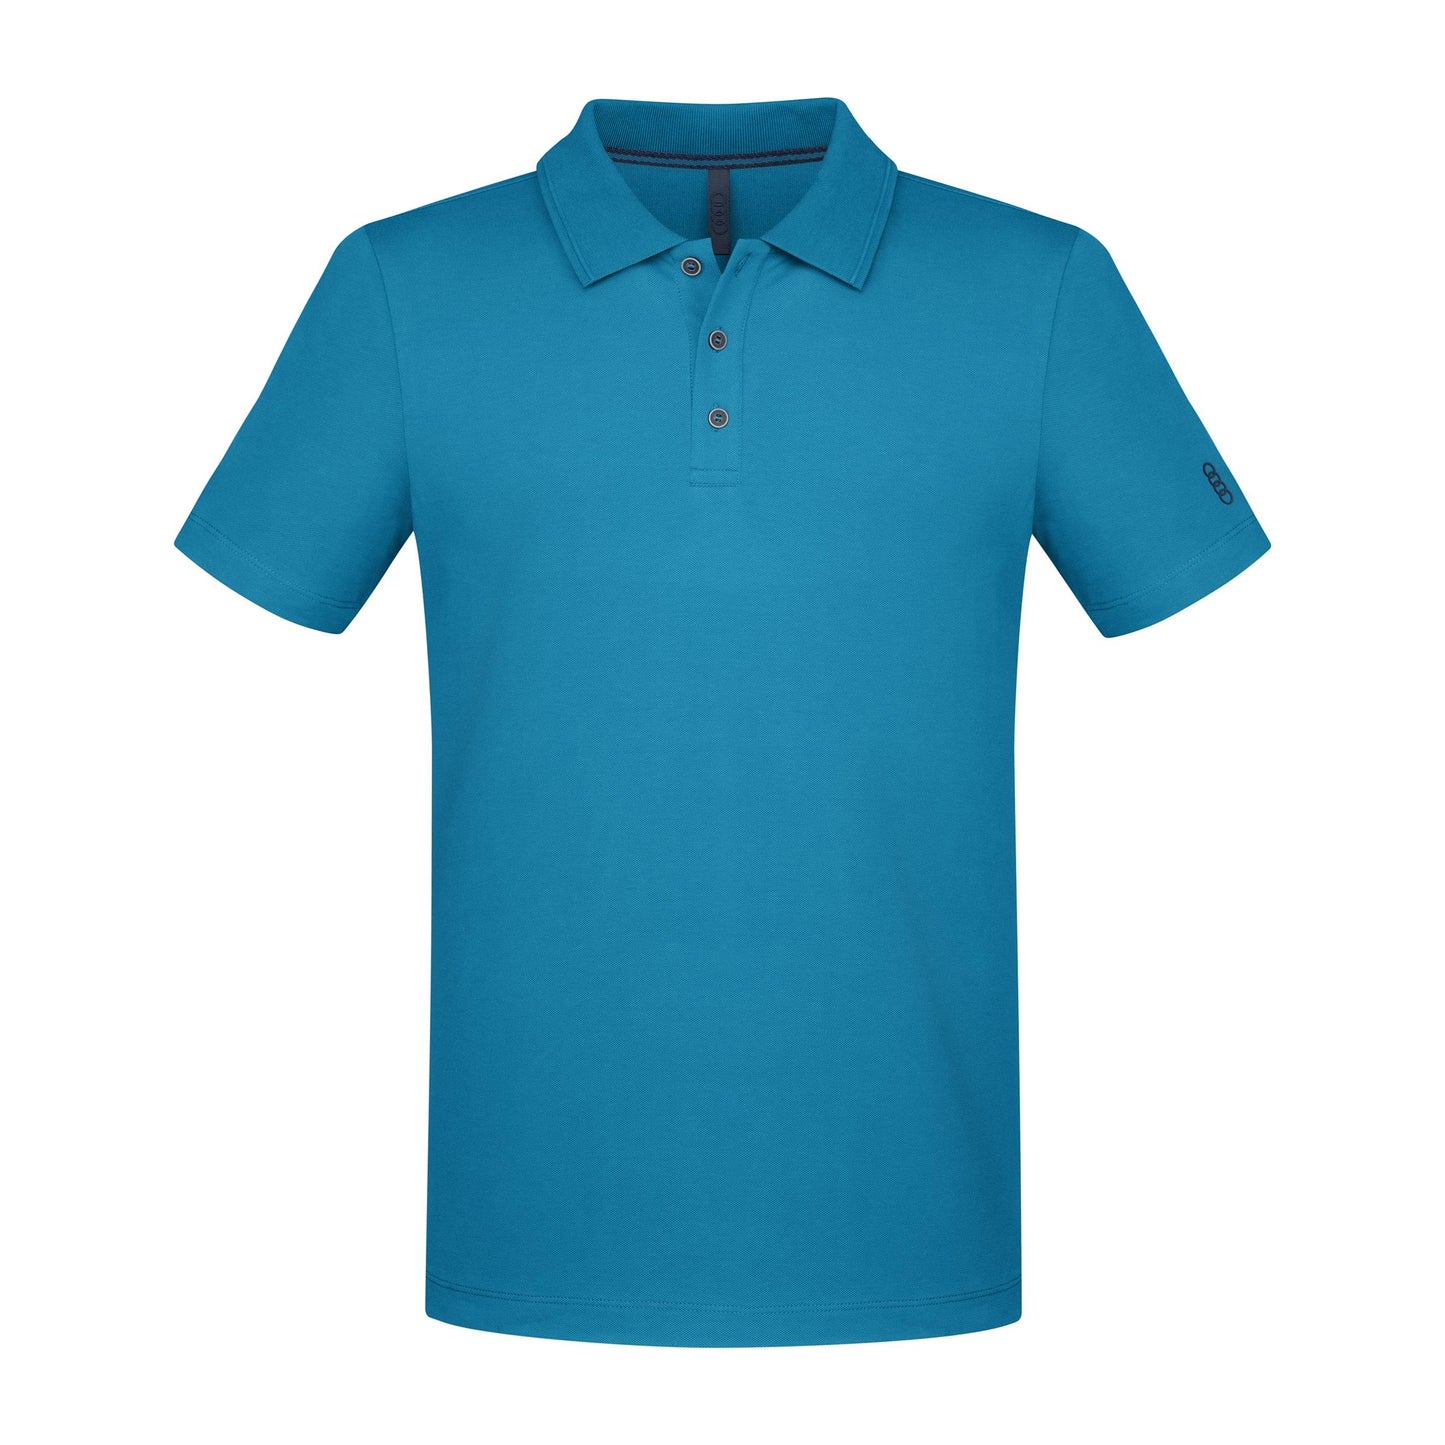 Audi polo shirt, men's turquoise